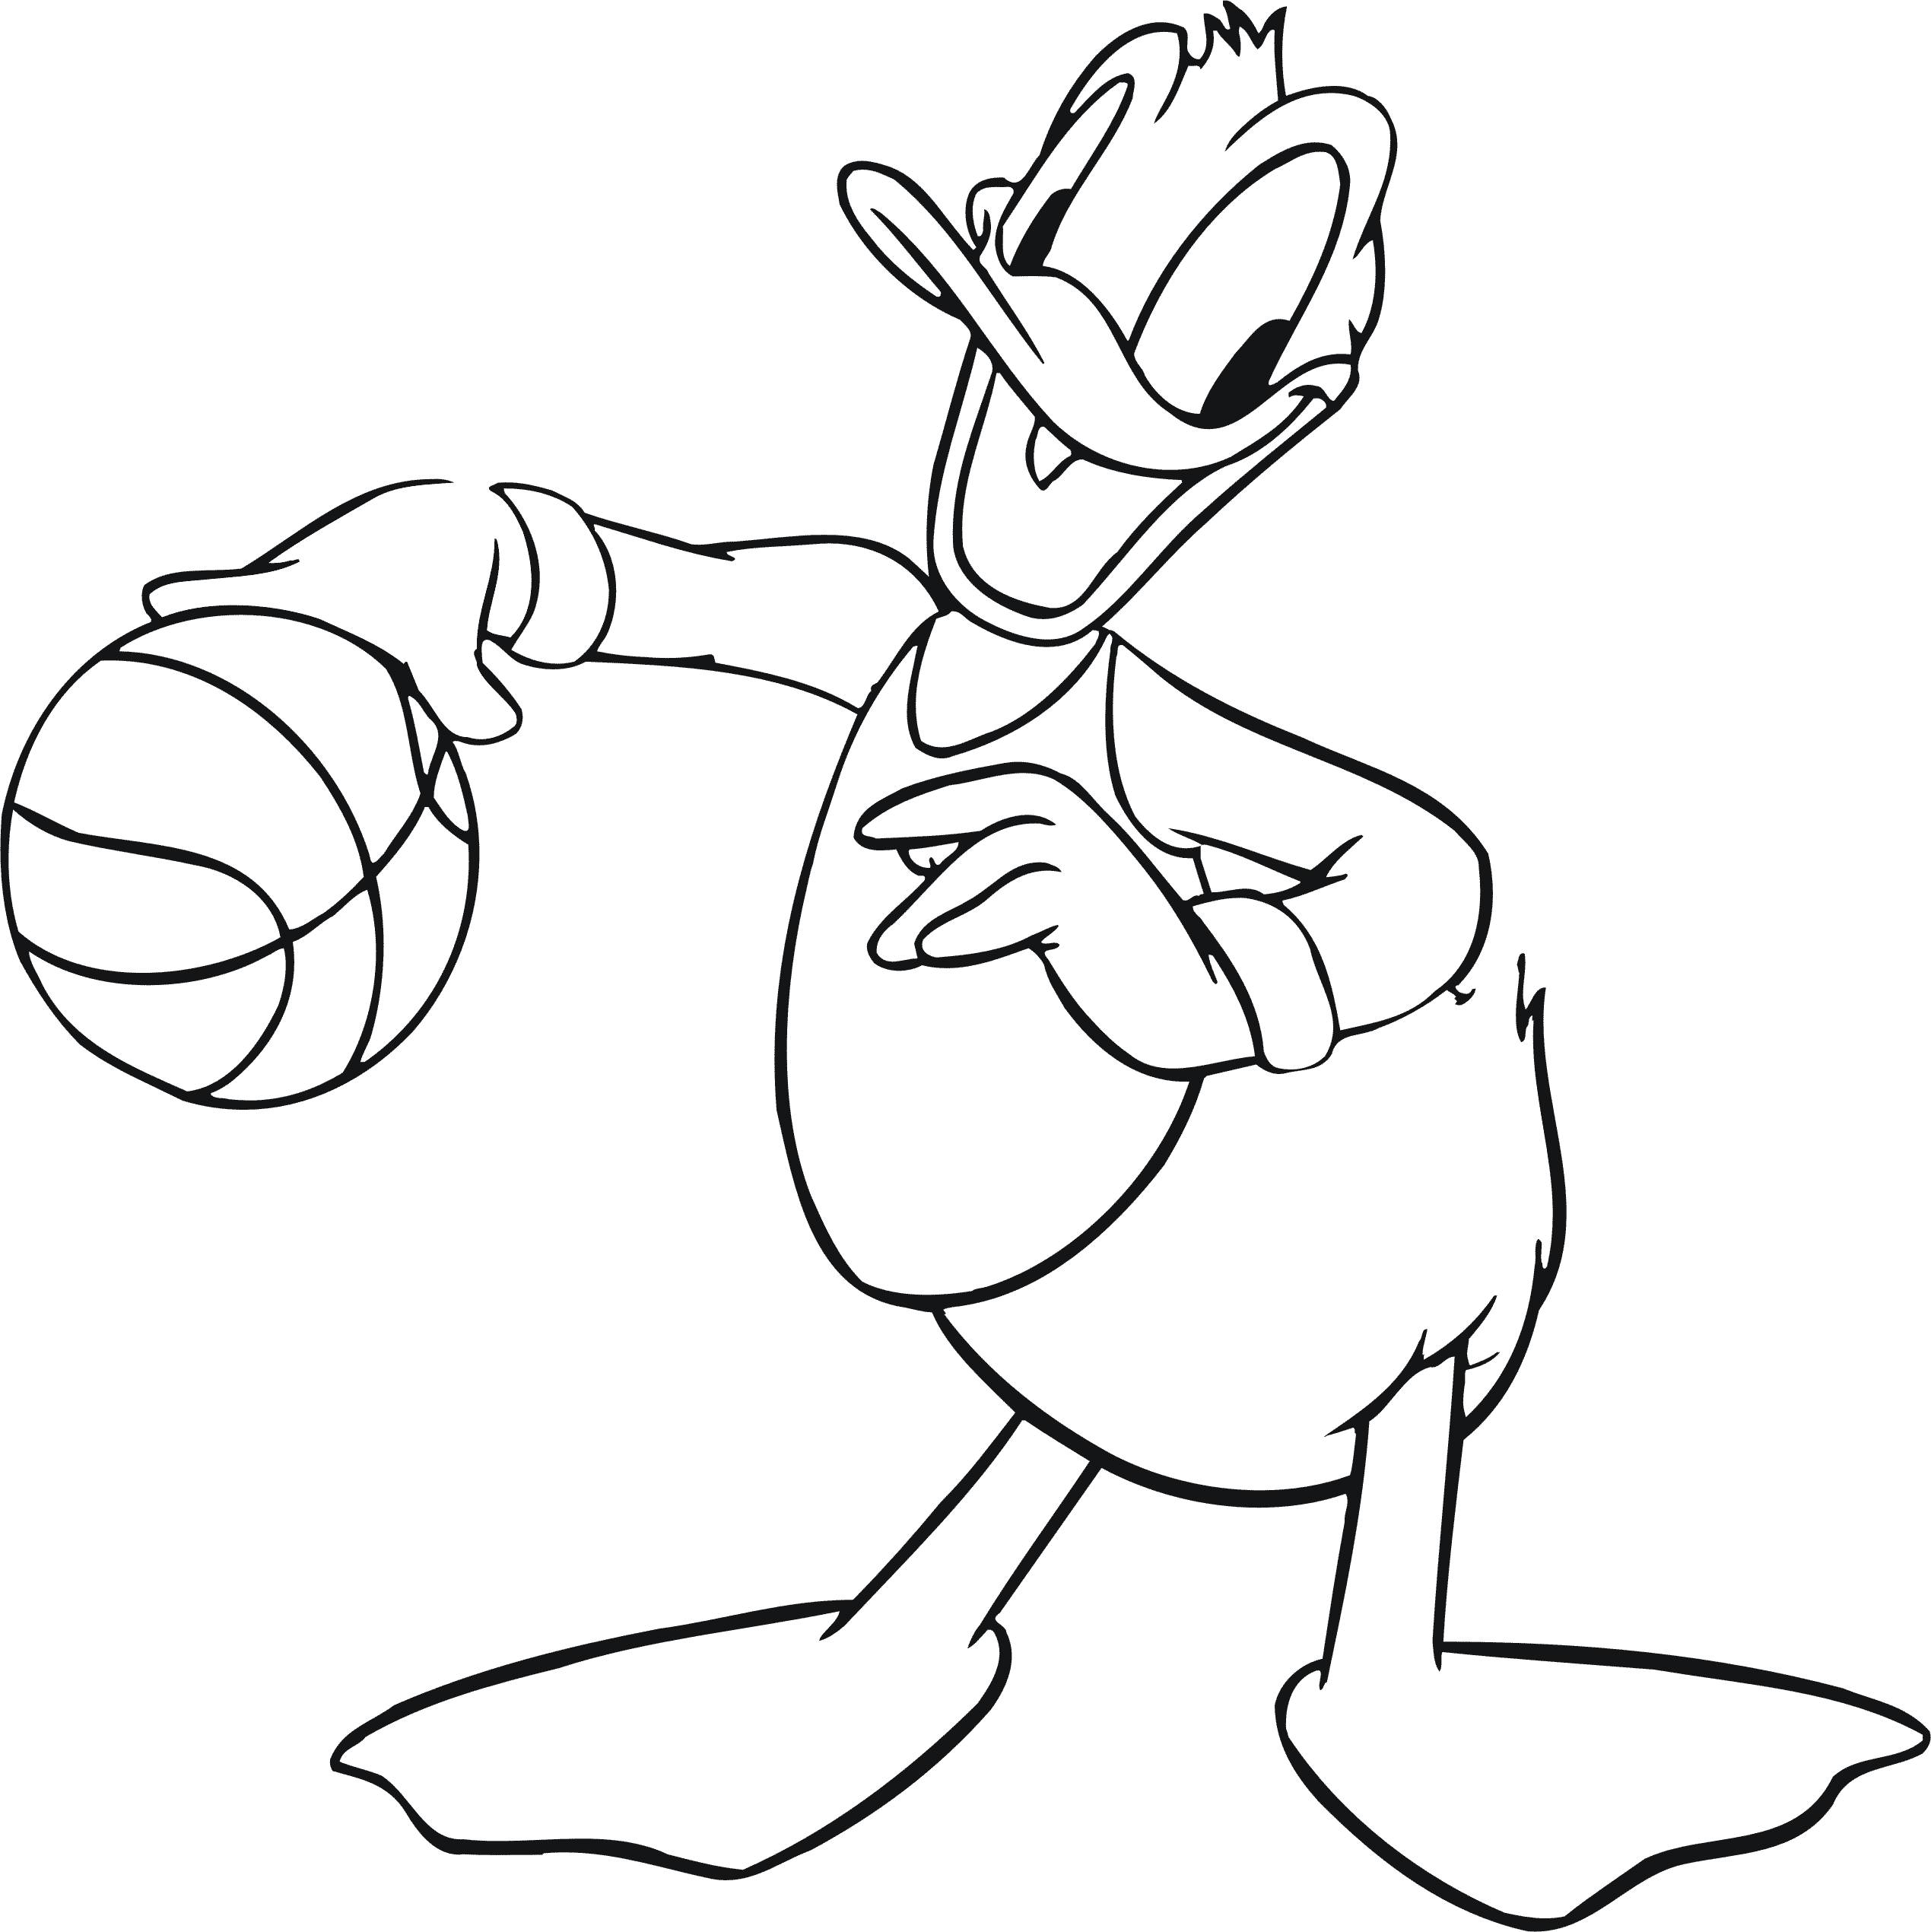 Photo Donald plays basketball